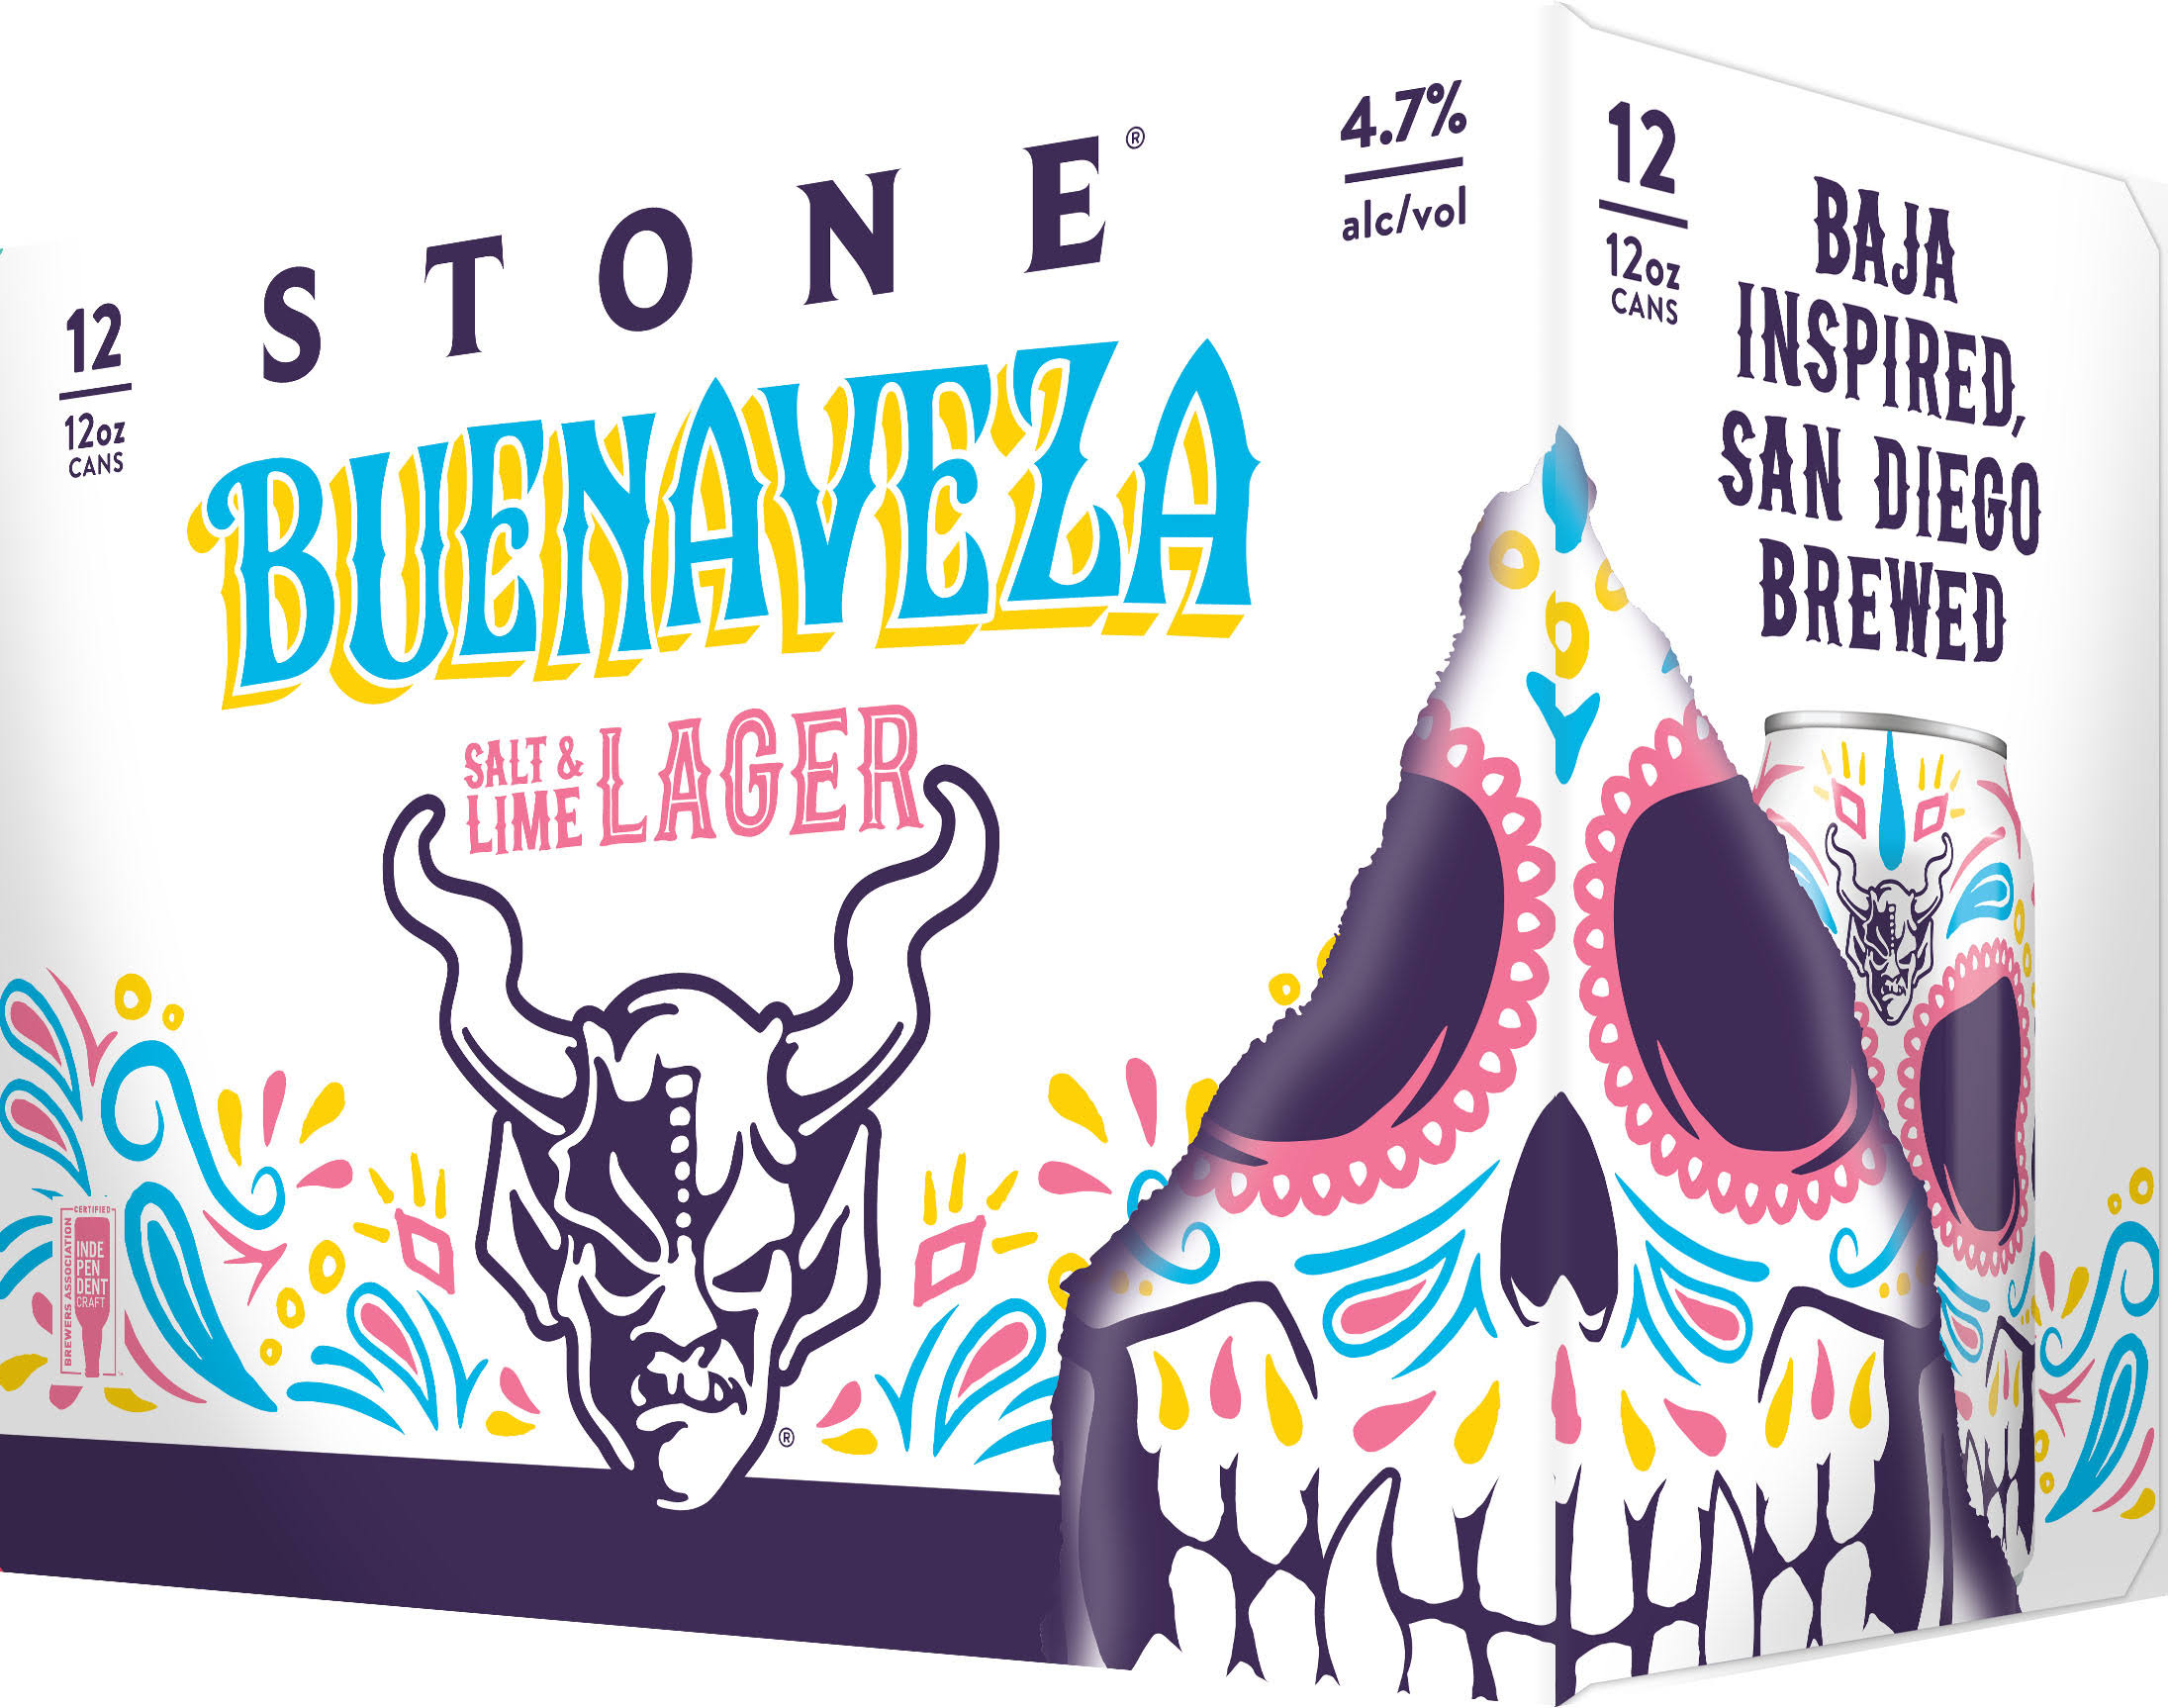 Stone Beer, Buenaveza, Salt & Lime Lager - 12 pack, 12 oz cans